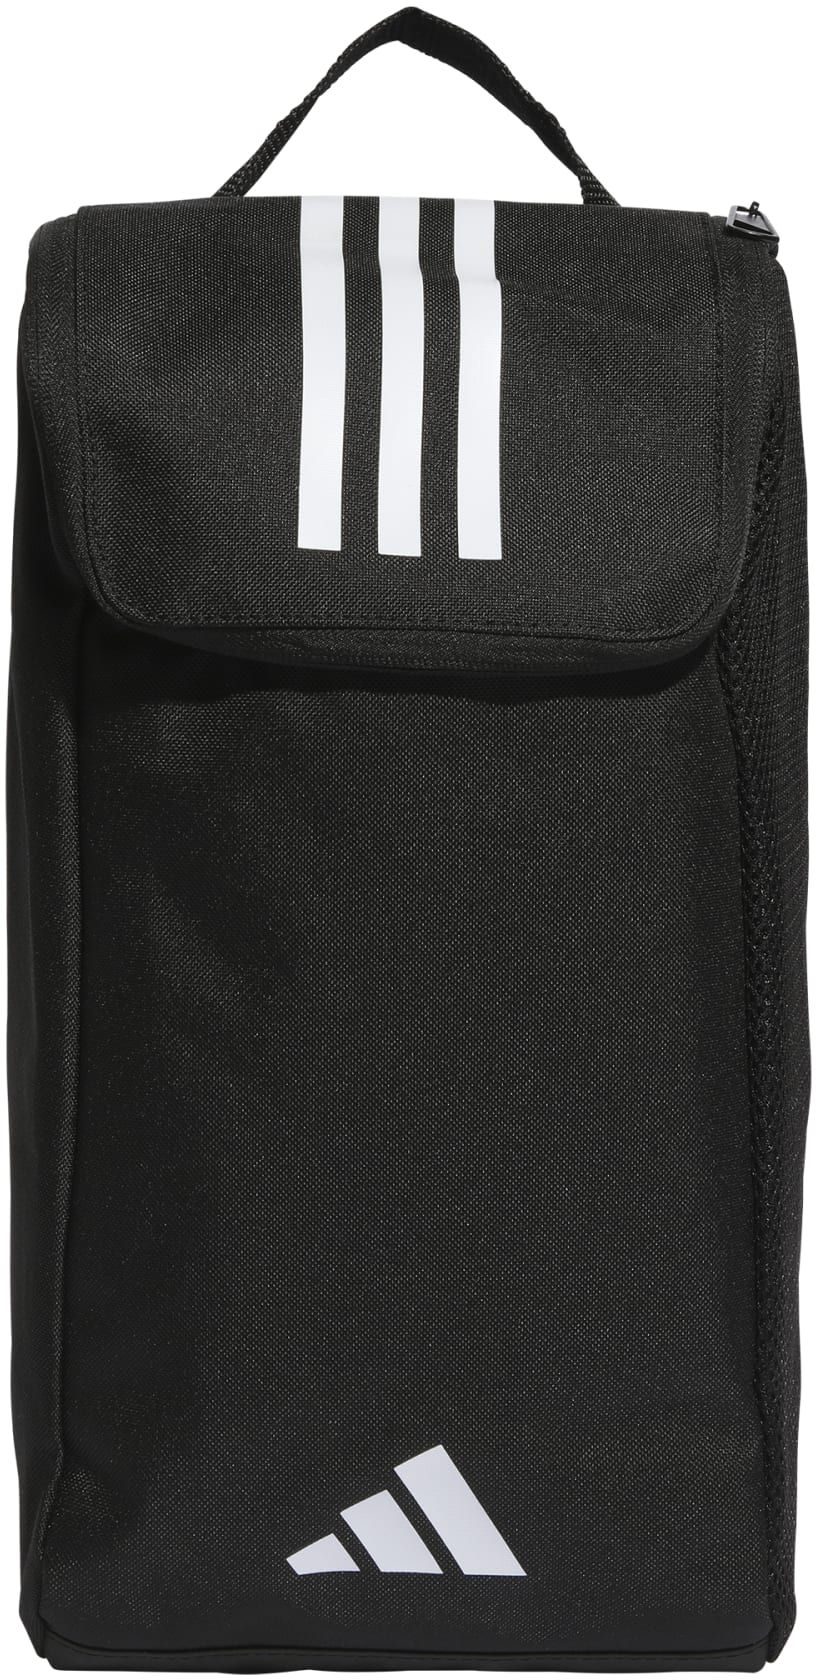 adidas Santiago Lunch Bag, Active Maroon/Black/White, One Size - Walmart.com